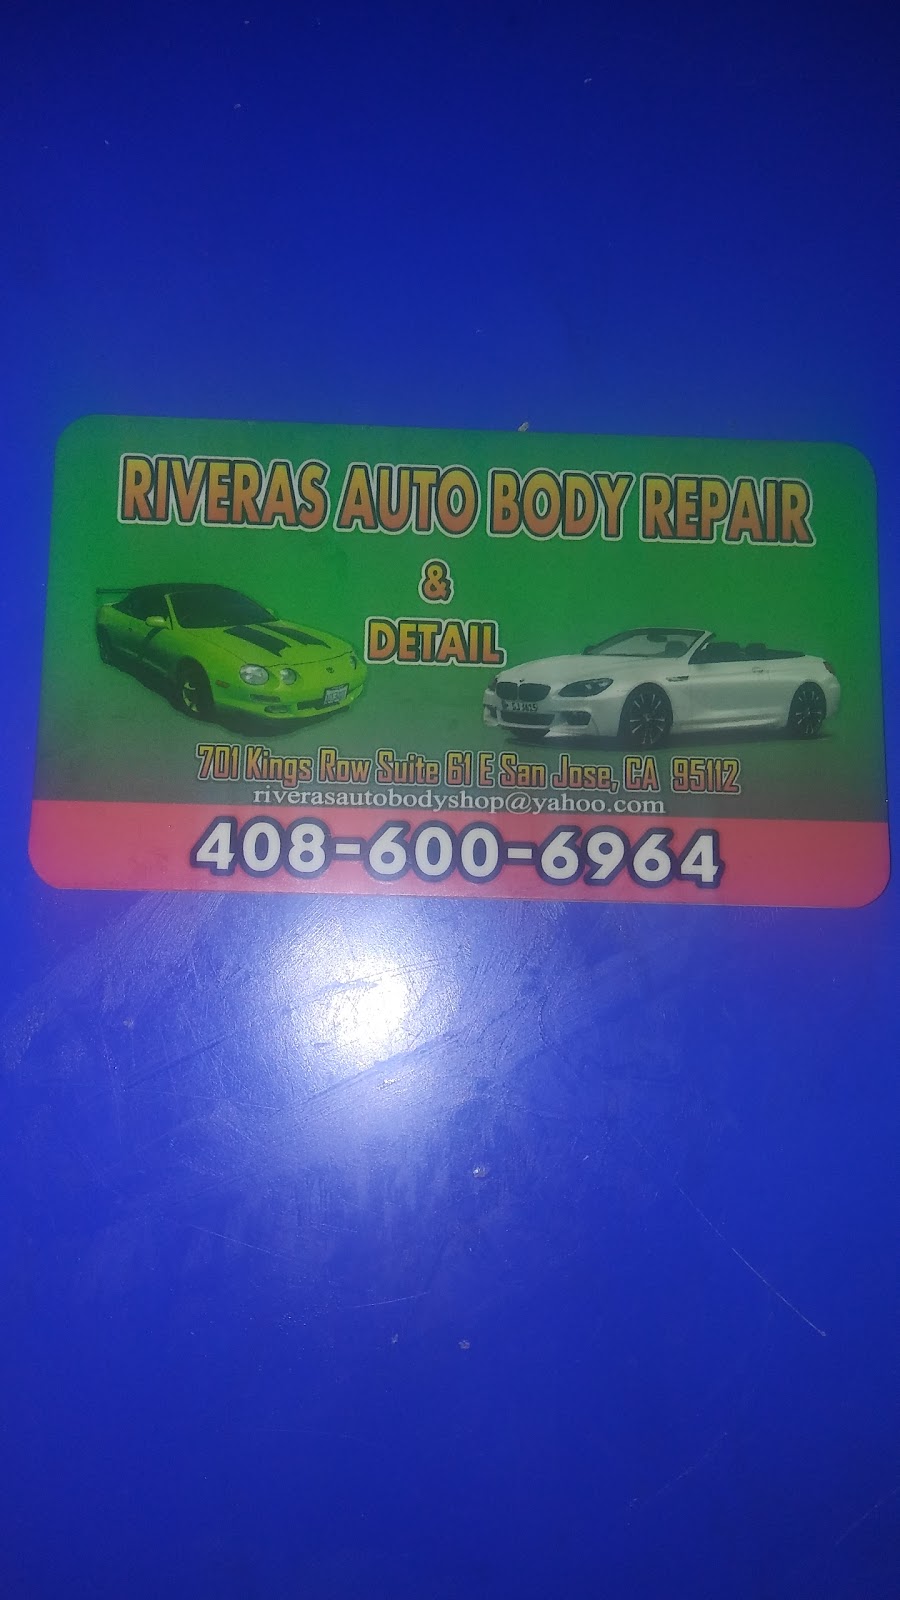 Riveras auto body repair and detail | 701 Kings Row #61e, San Jose, CA 95112 | Phone: (408) 600-6964